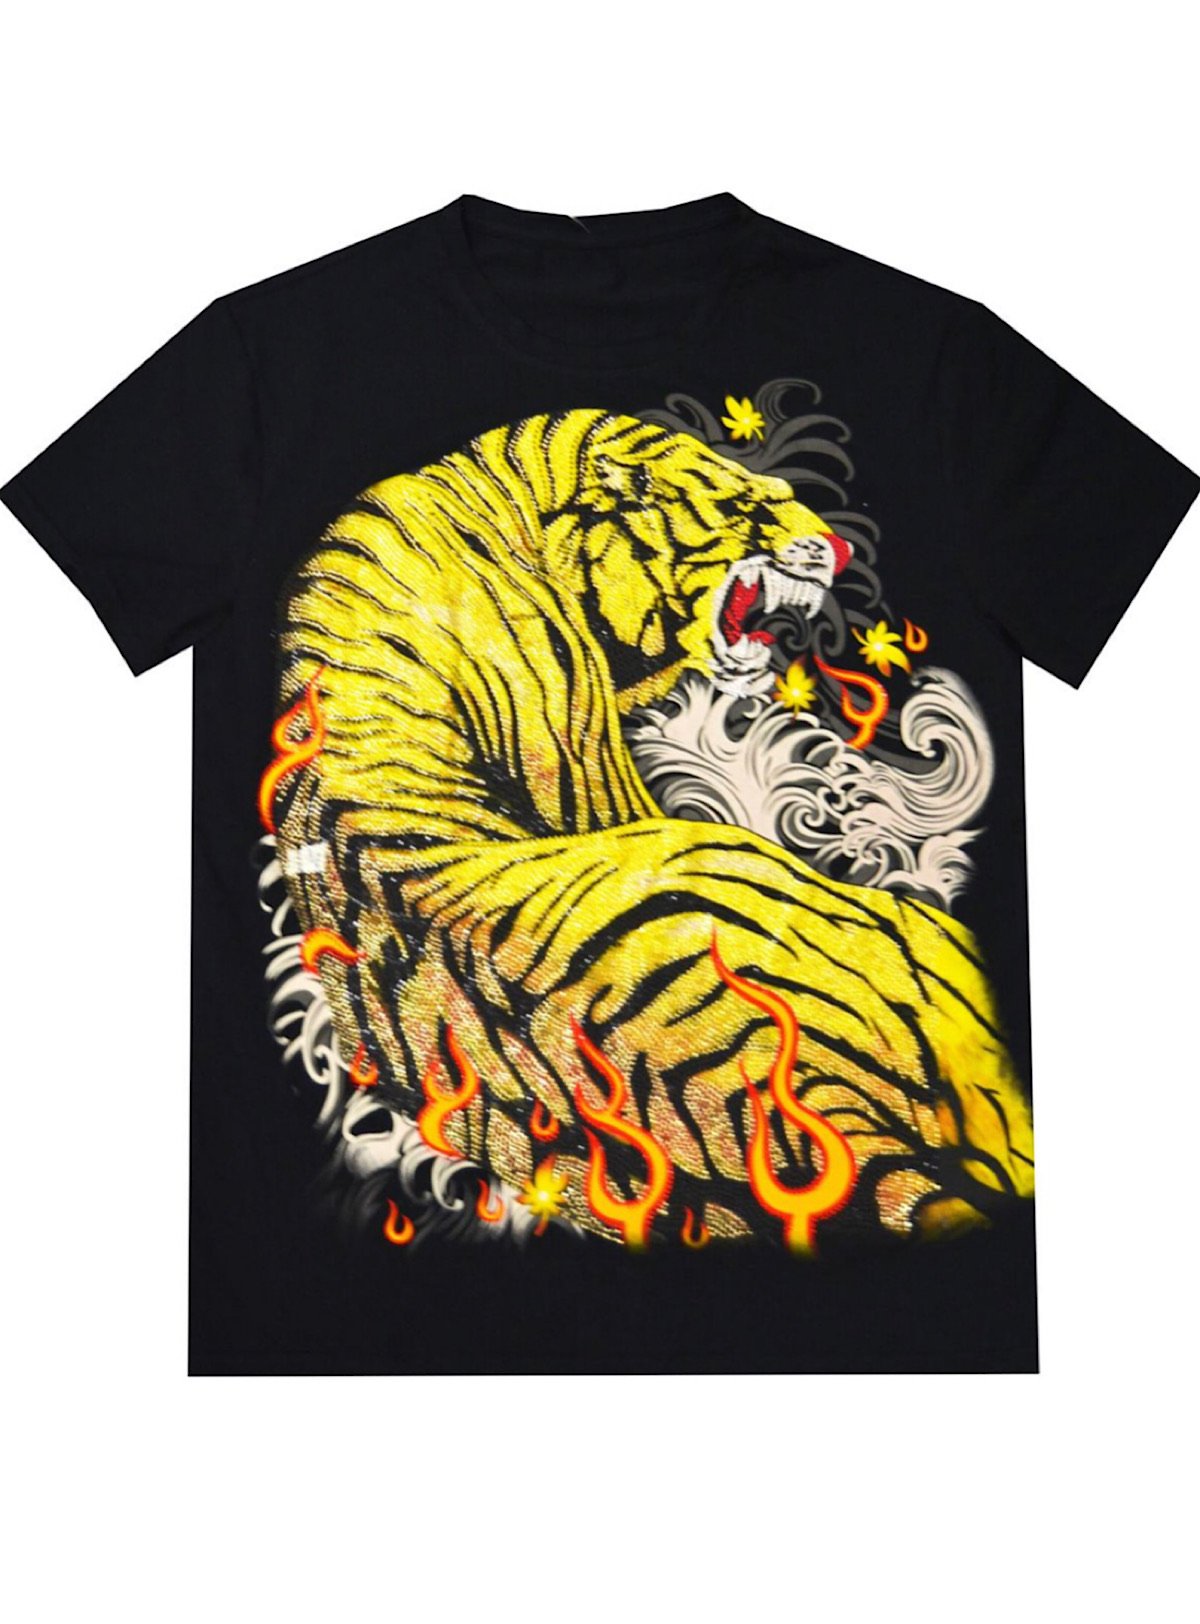 tiger tails t shirt